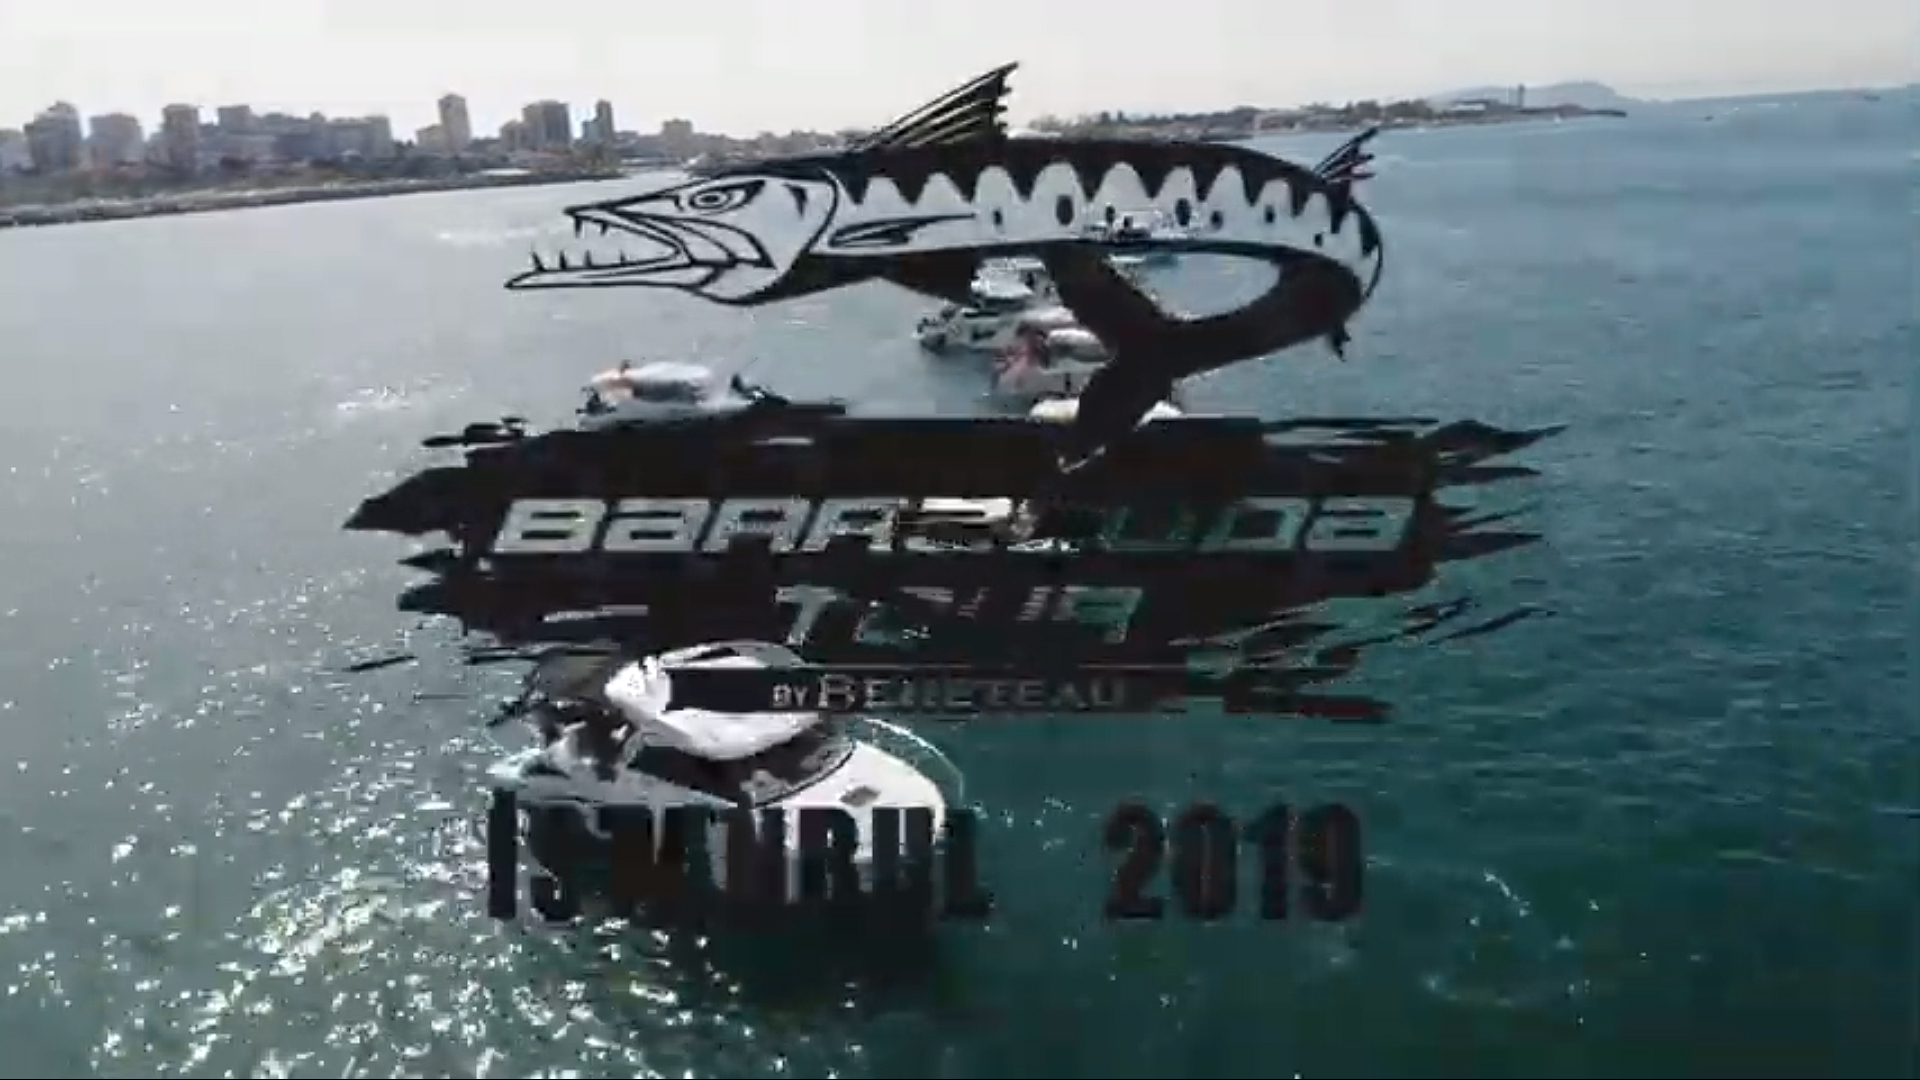 {"TR":"4. Barracuda Tour Istanbul - 2019","EN":"4. Barracuda Tour Istanbul - 2019"}